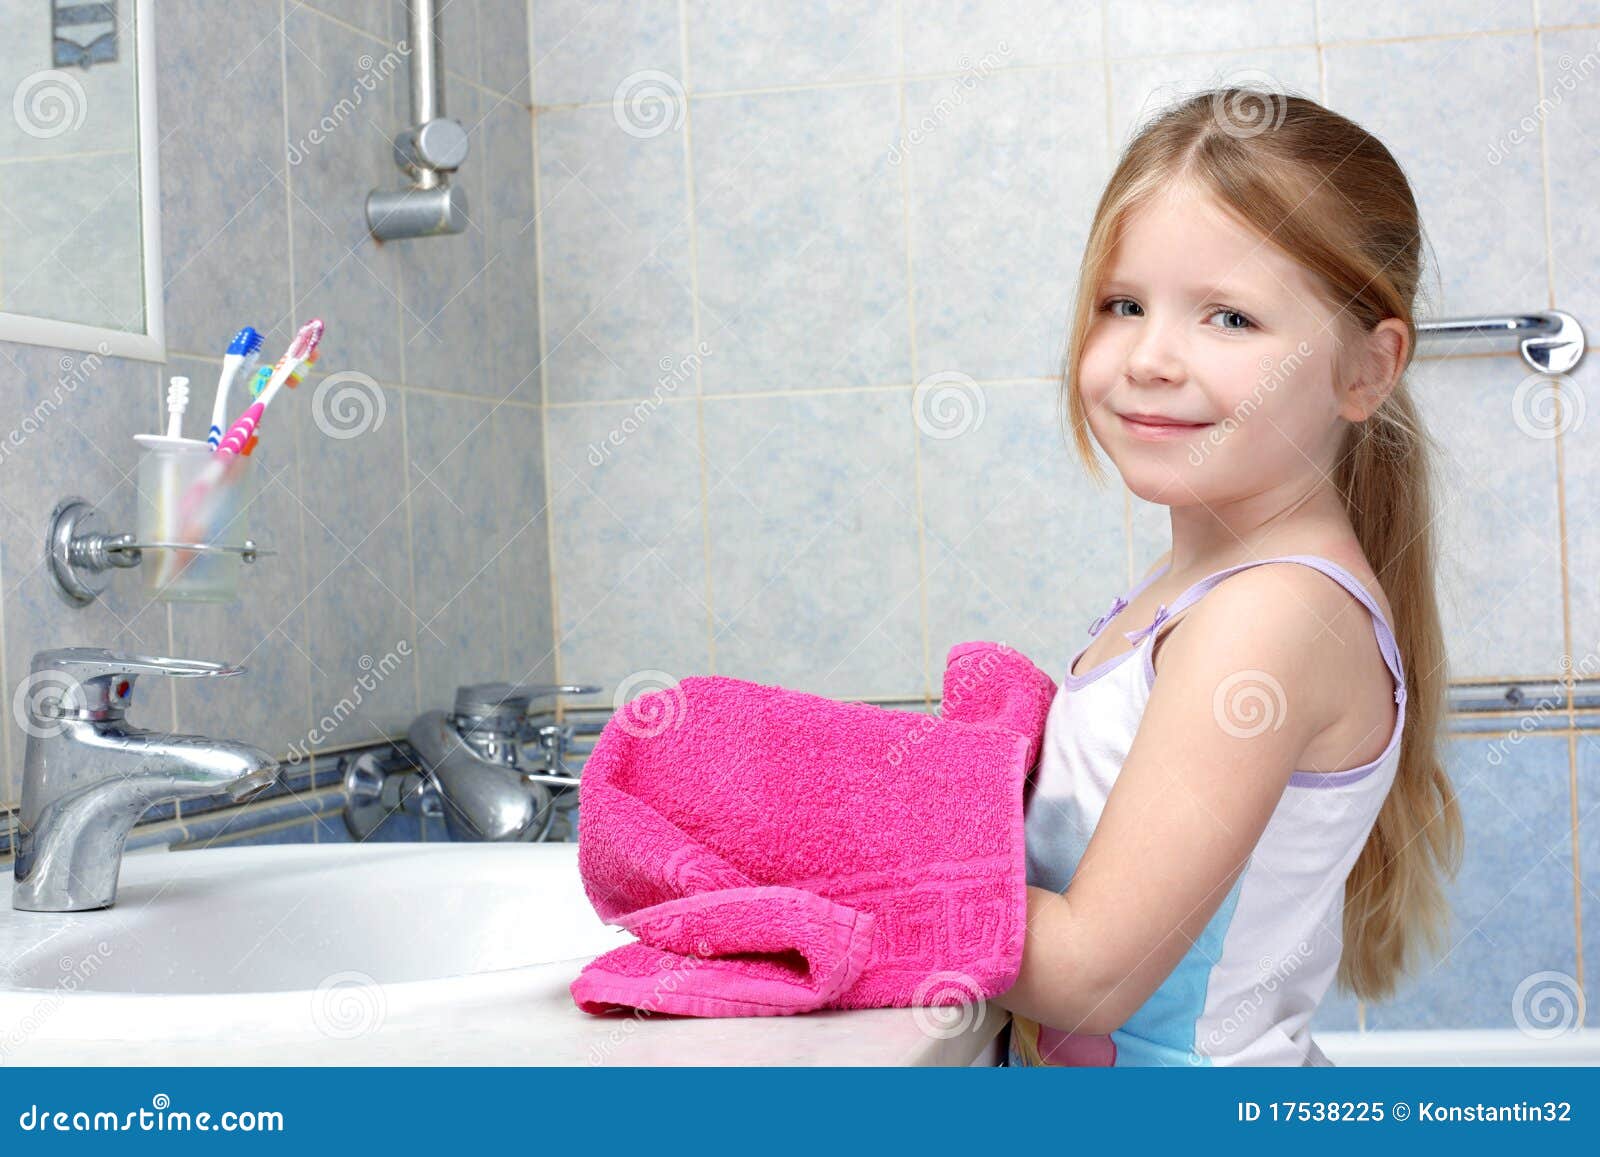 girl taken towel in bathroom